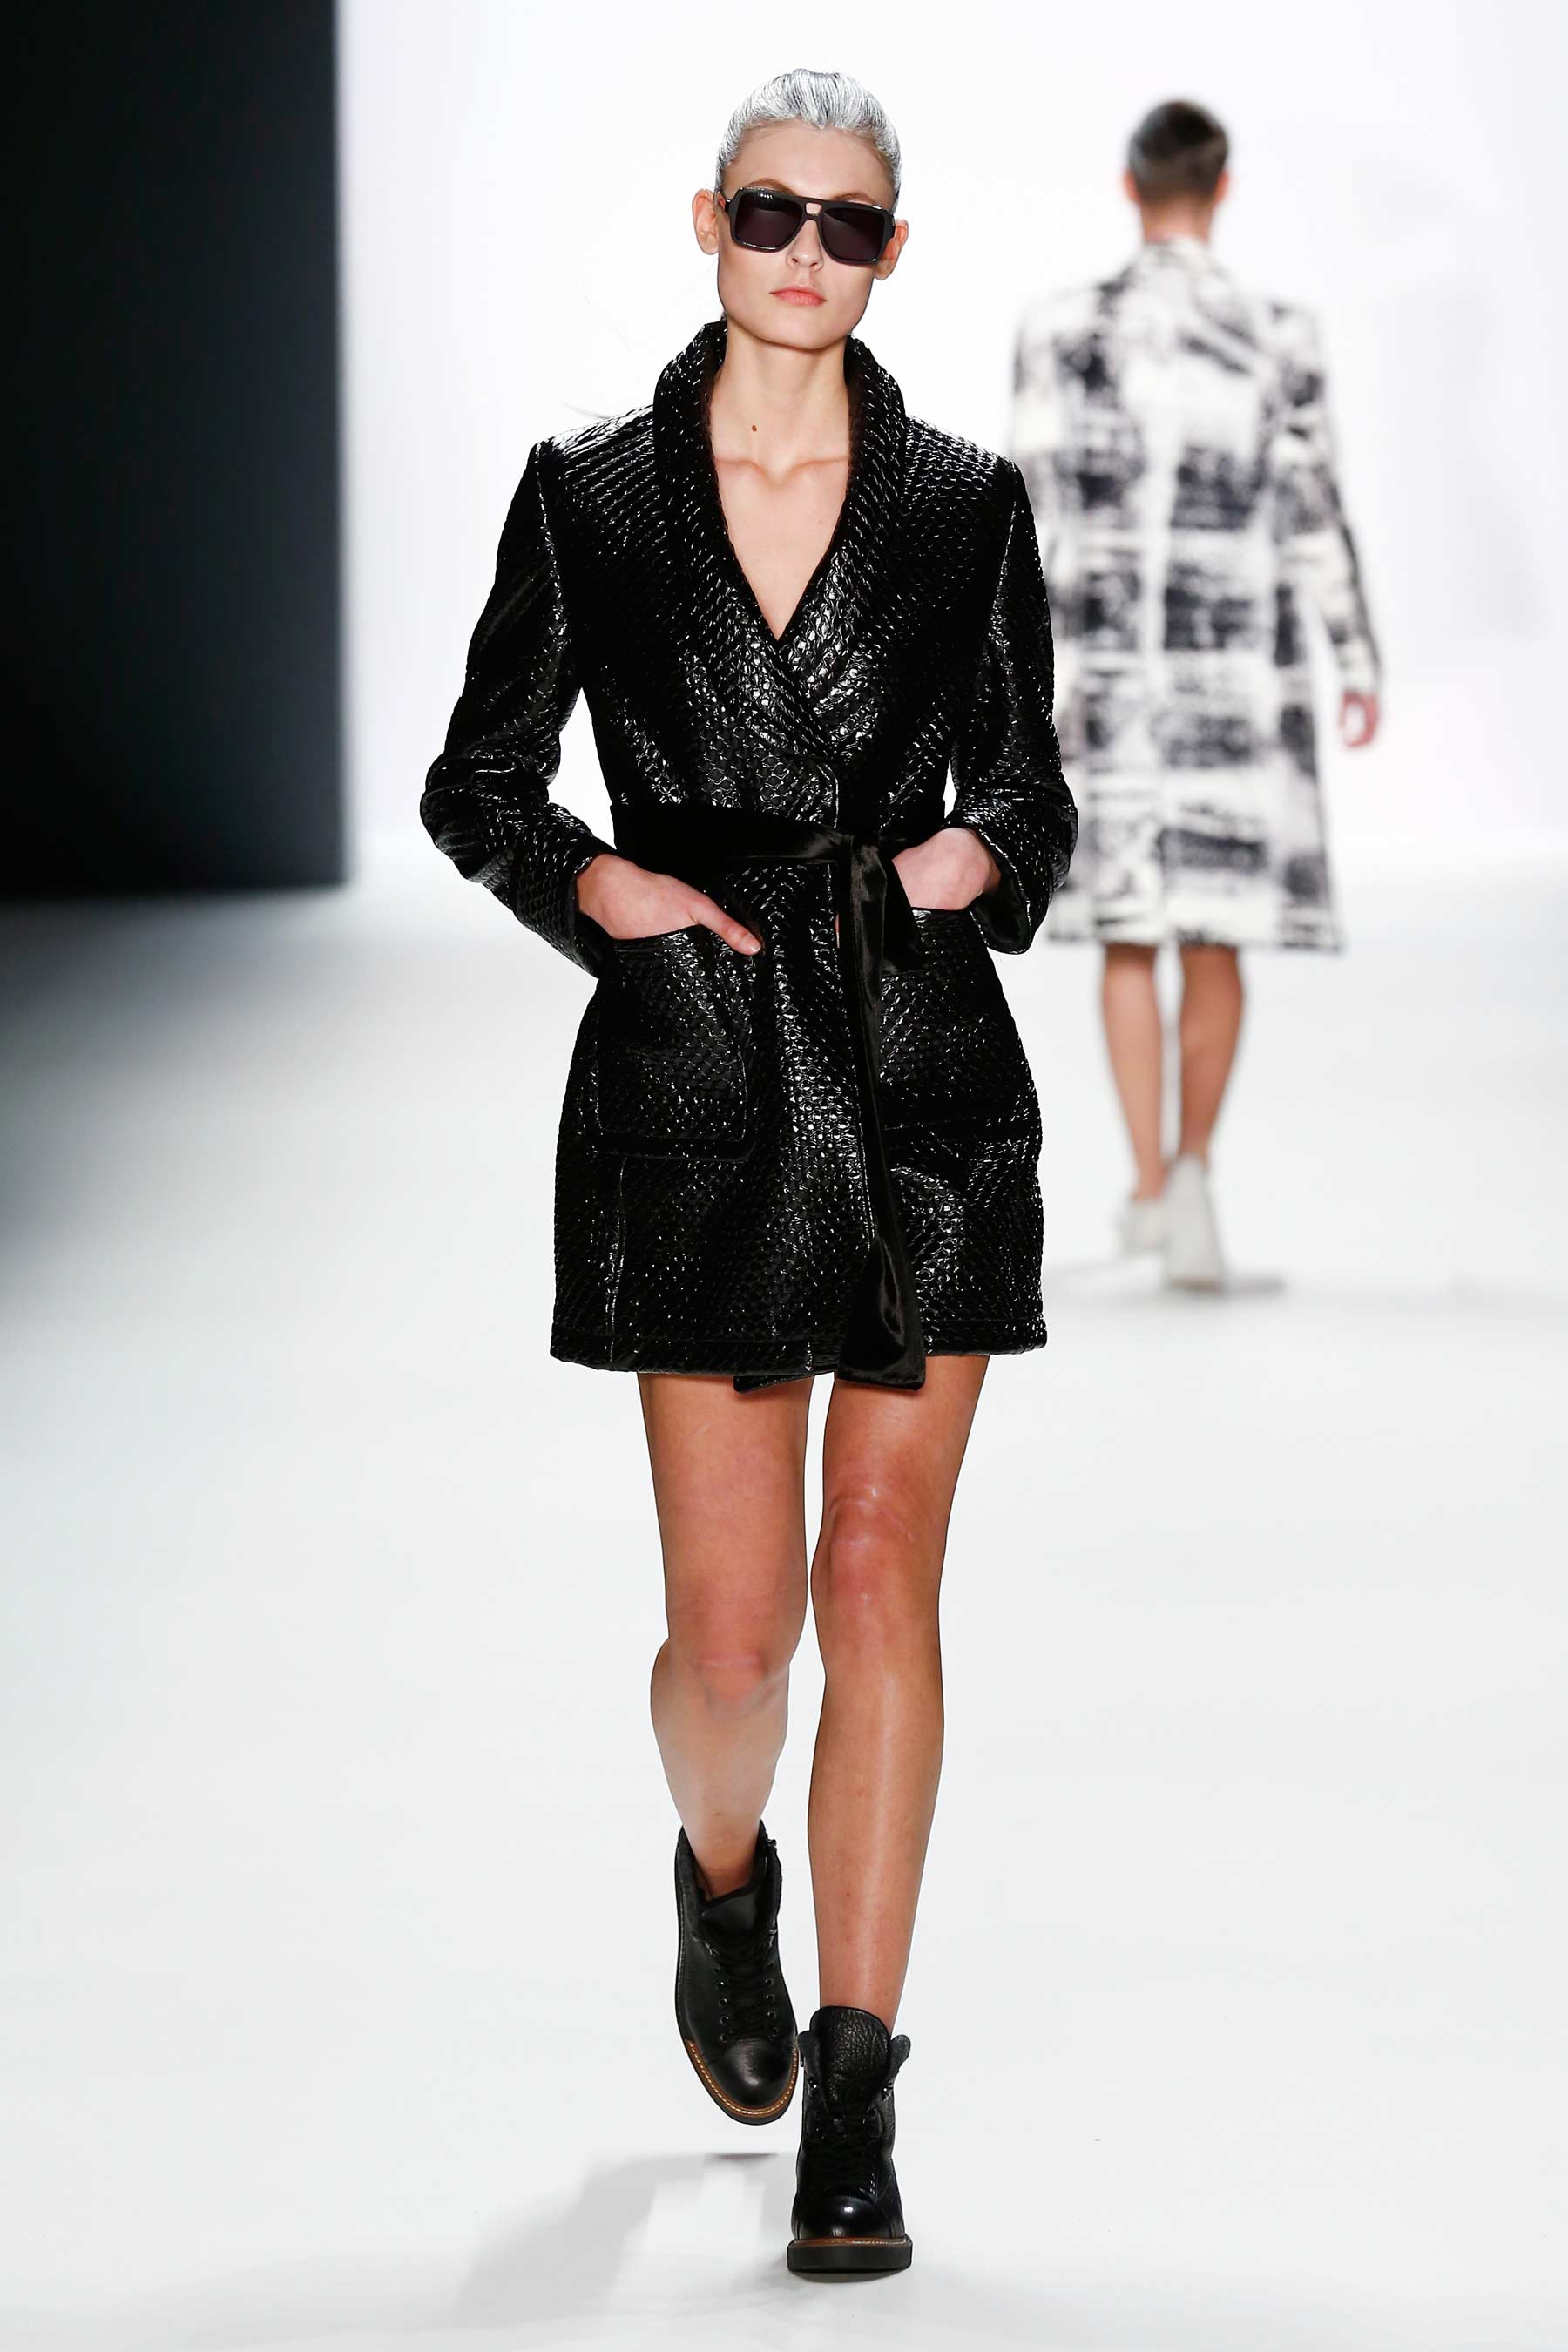 Models walk the runway at the Mercedes-Benz Fashion Week Berlin